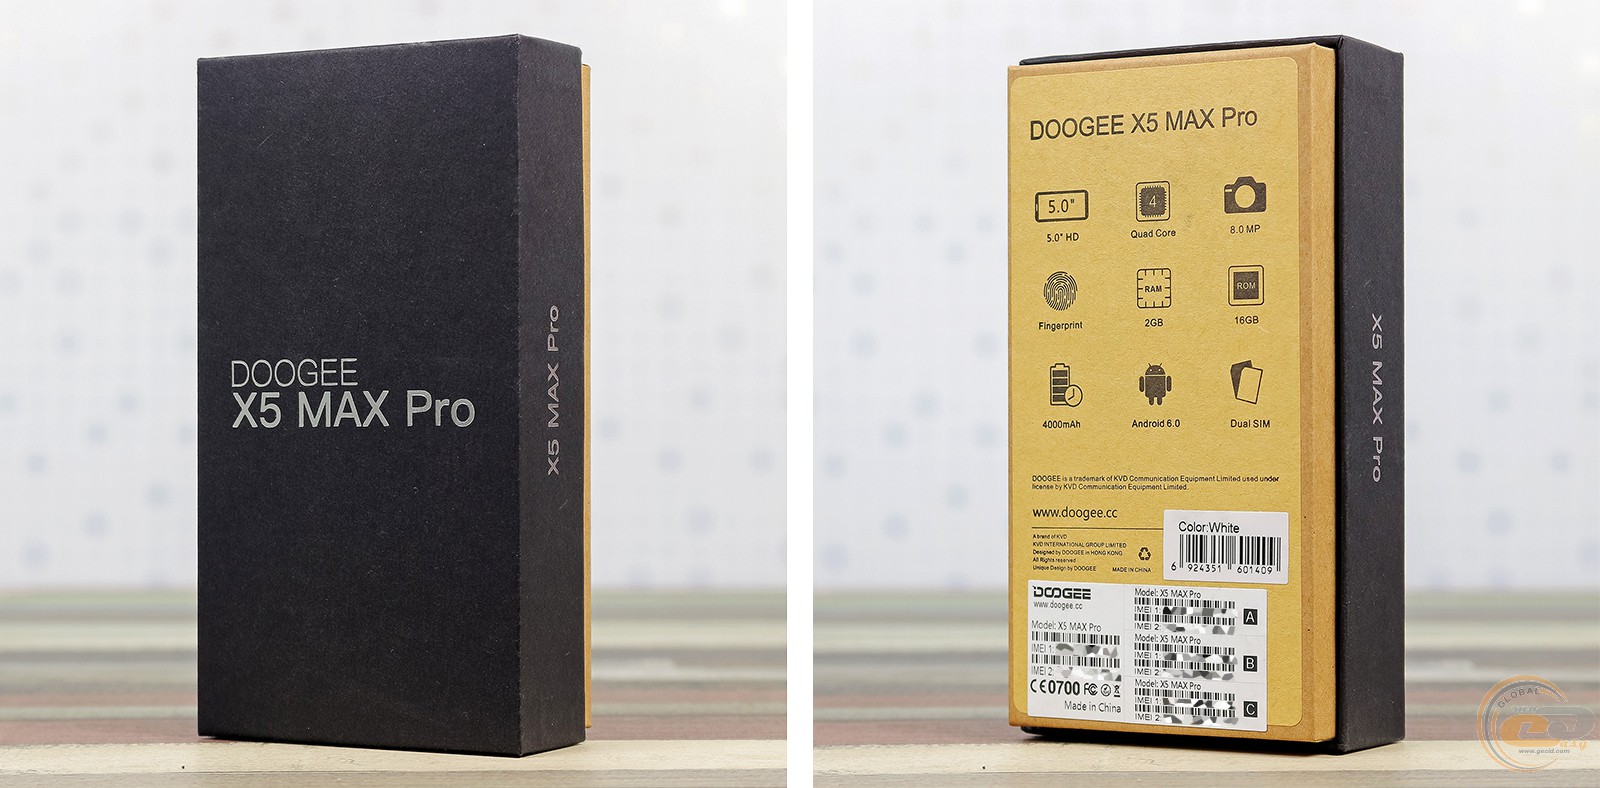 Обзор doogee x5 max pro: характеристики, отзывы и фото